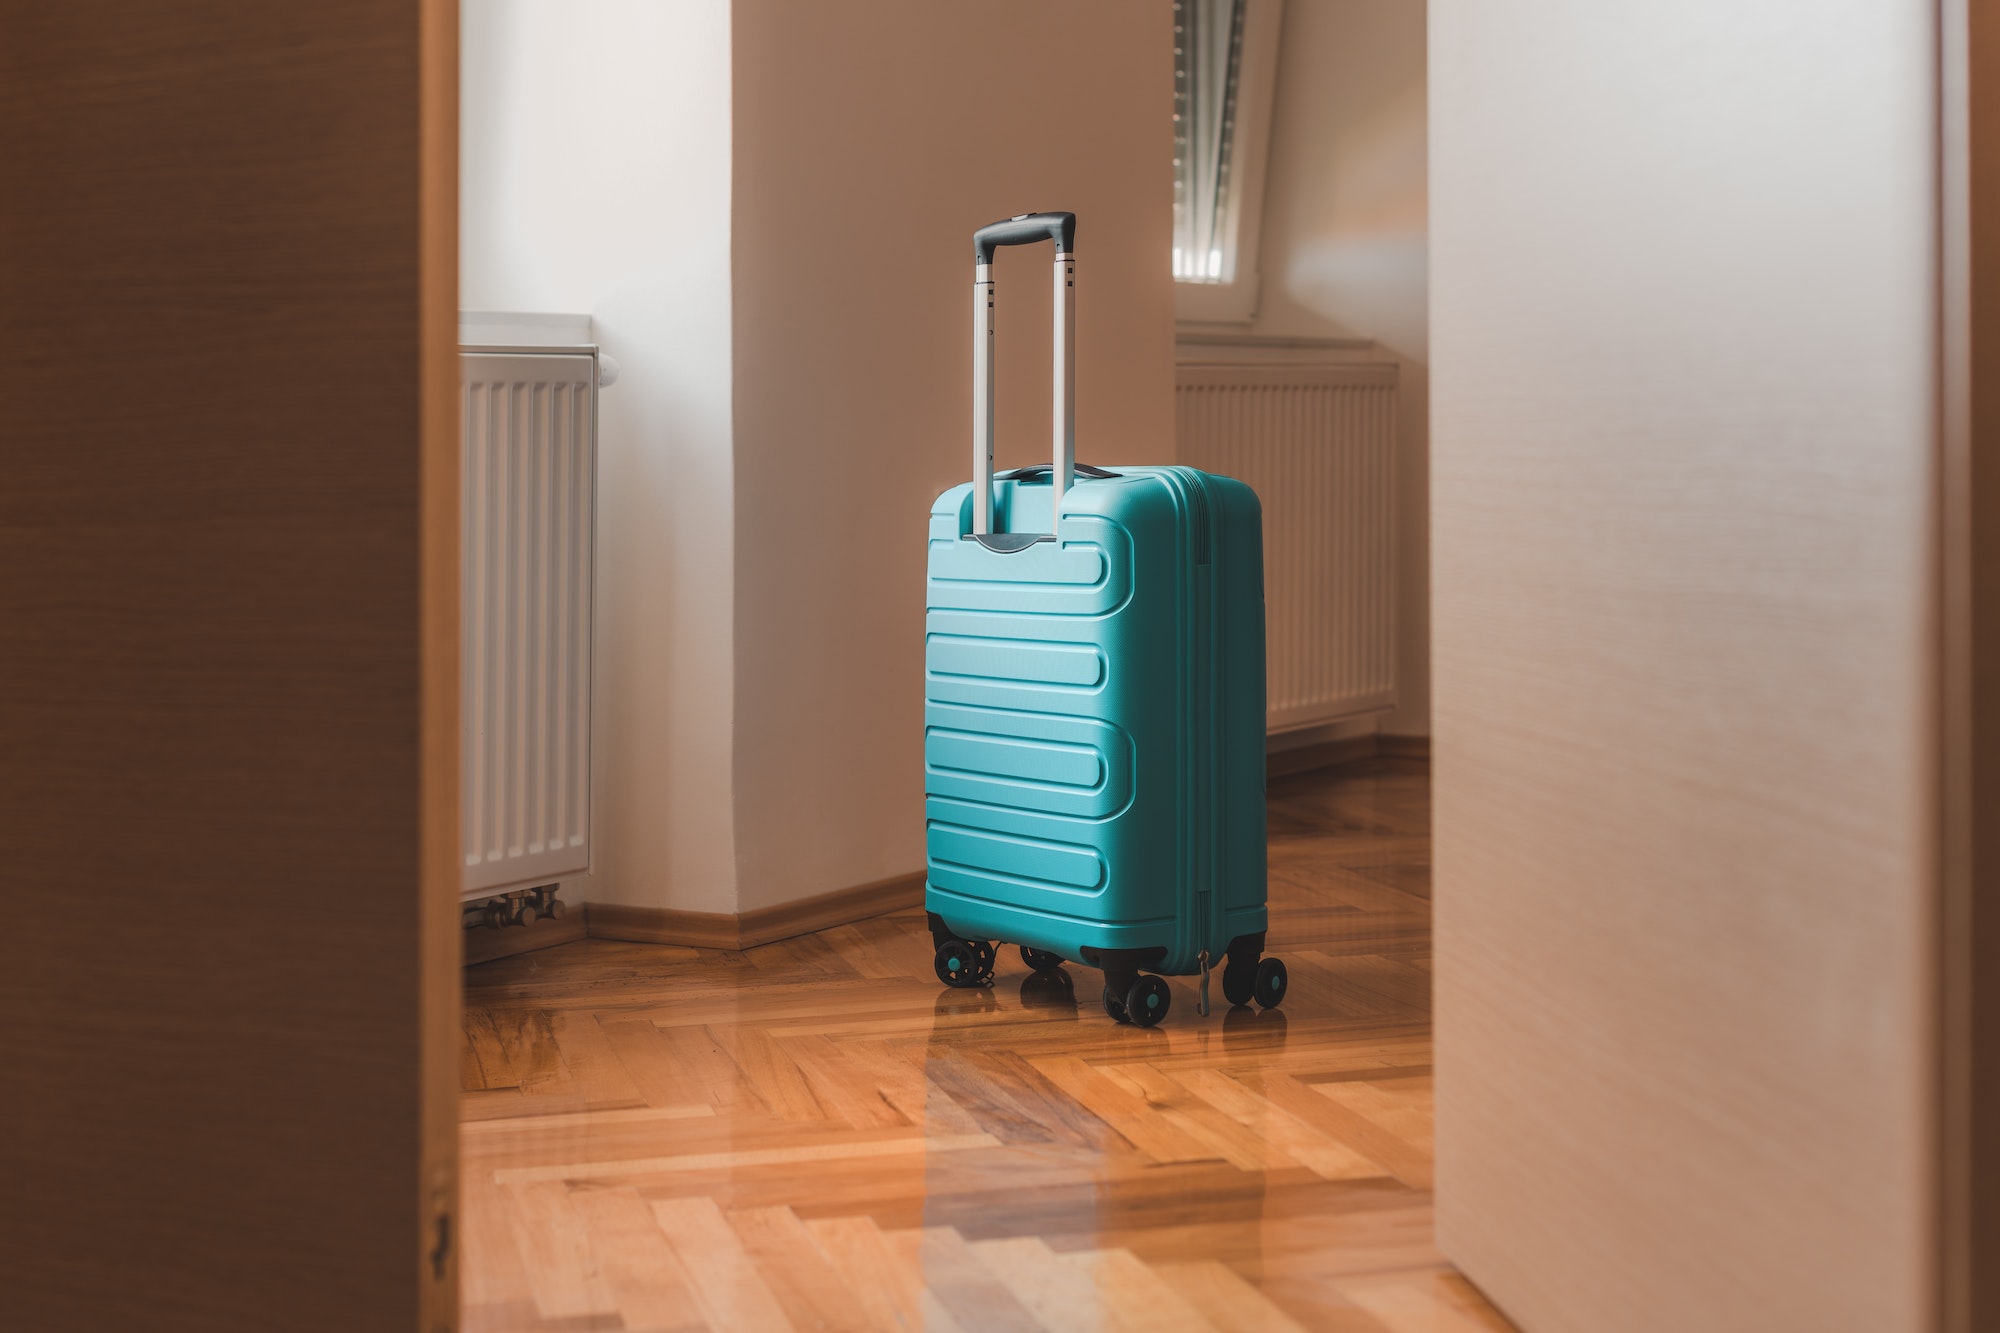 Travel suitcase behind the open door of hotel apartment room